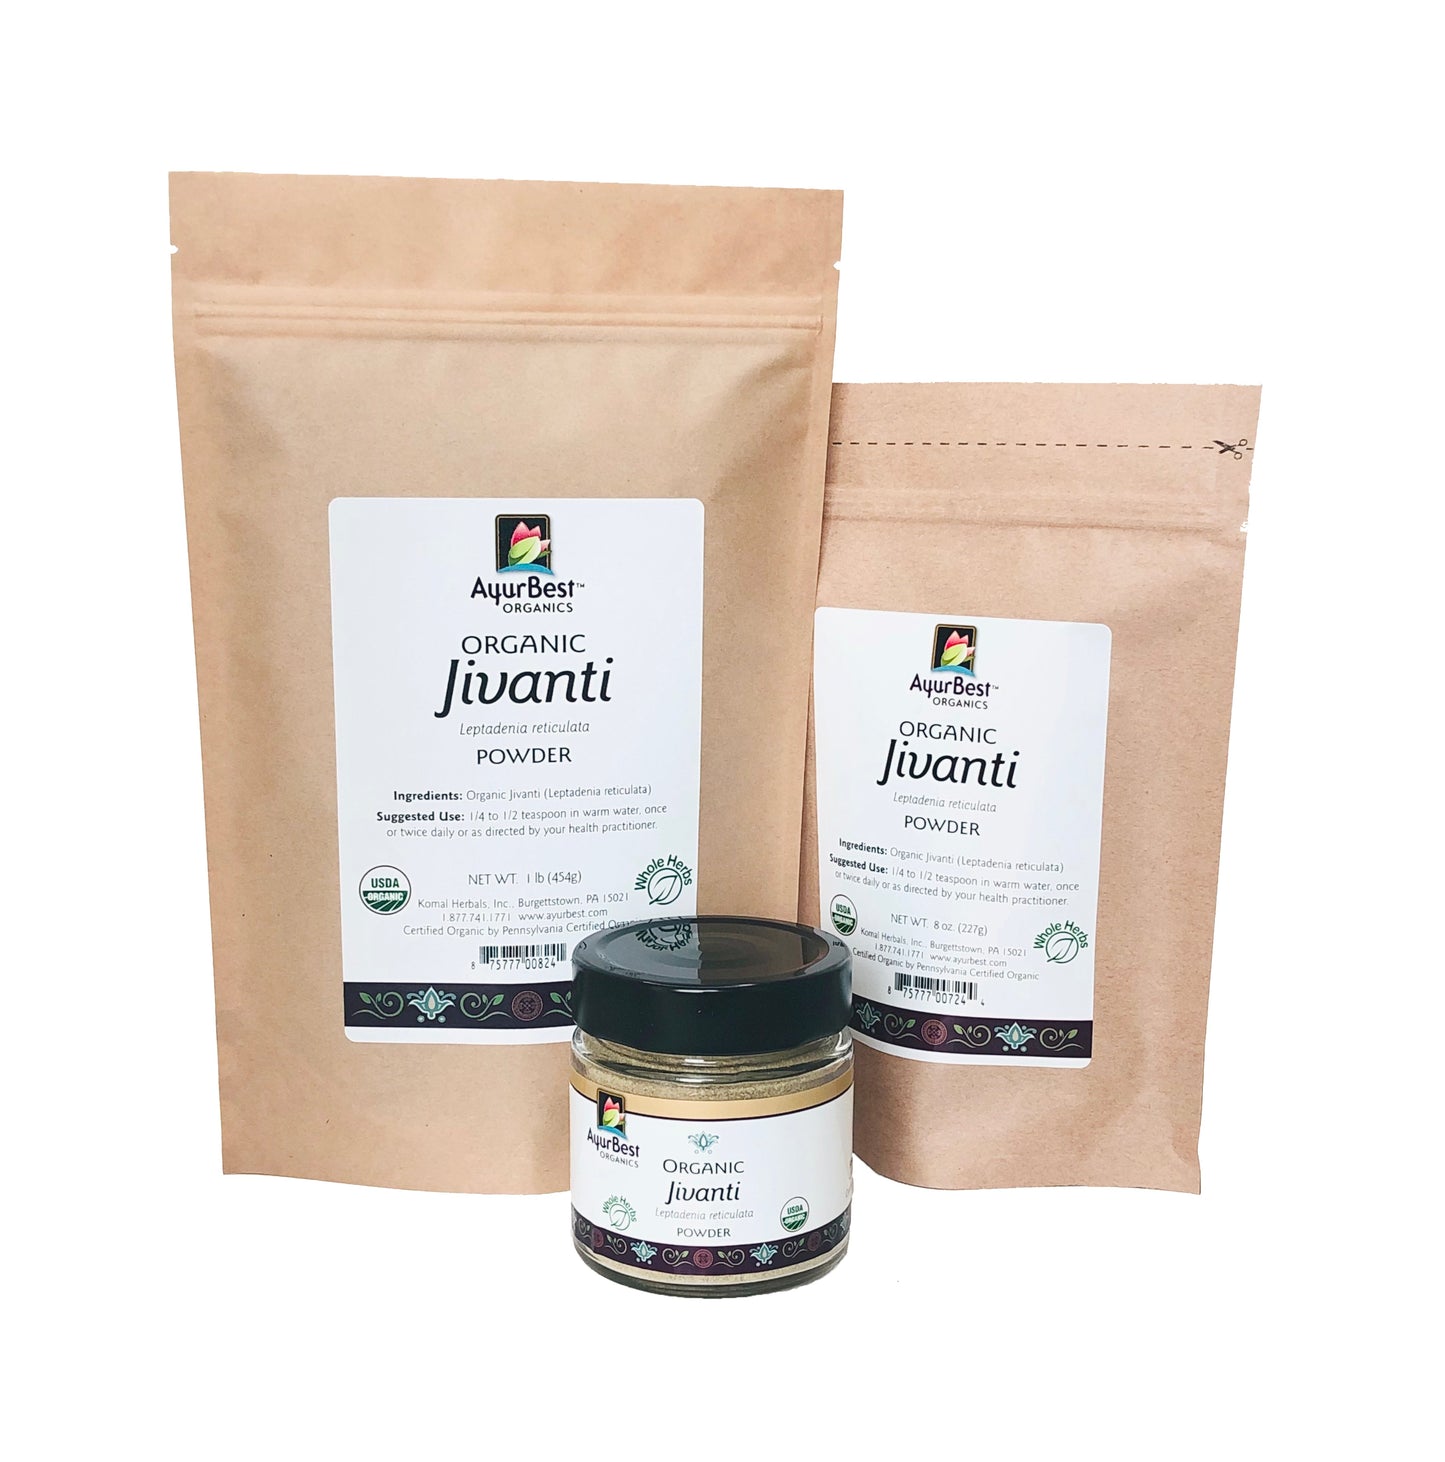 Wholesale Spices & Herbs - Jivanti Powder, Organic 3oz(87.2g) Jar